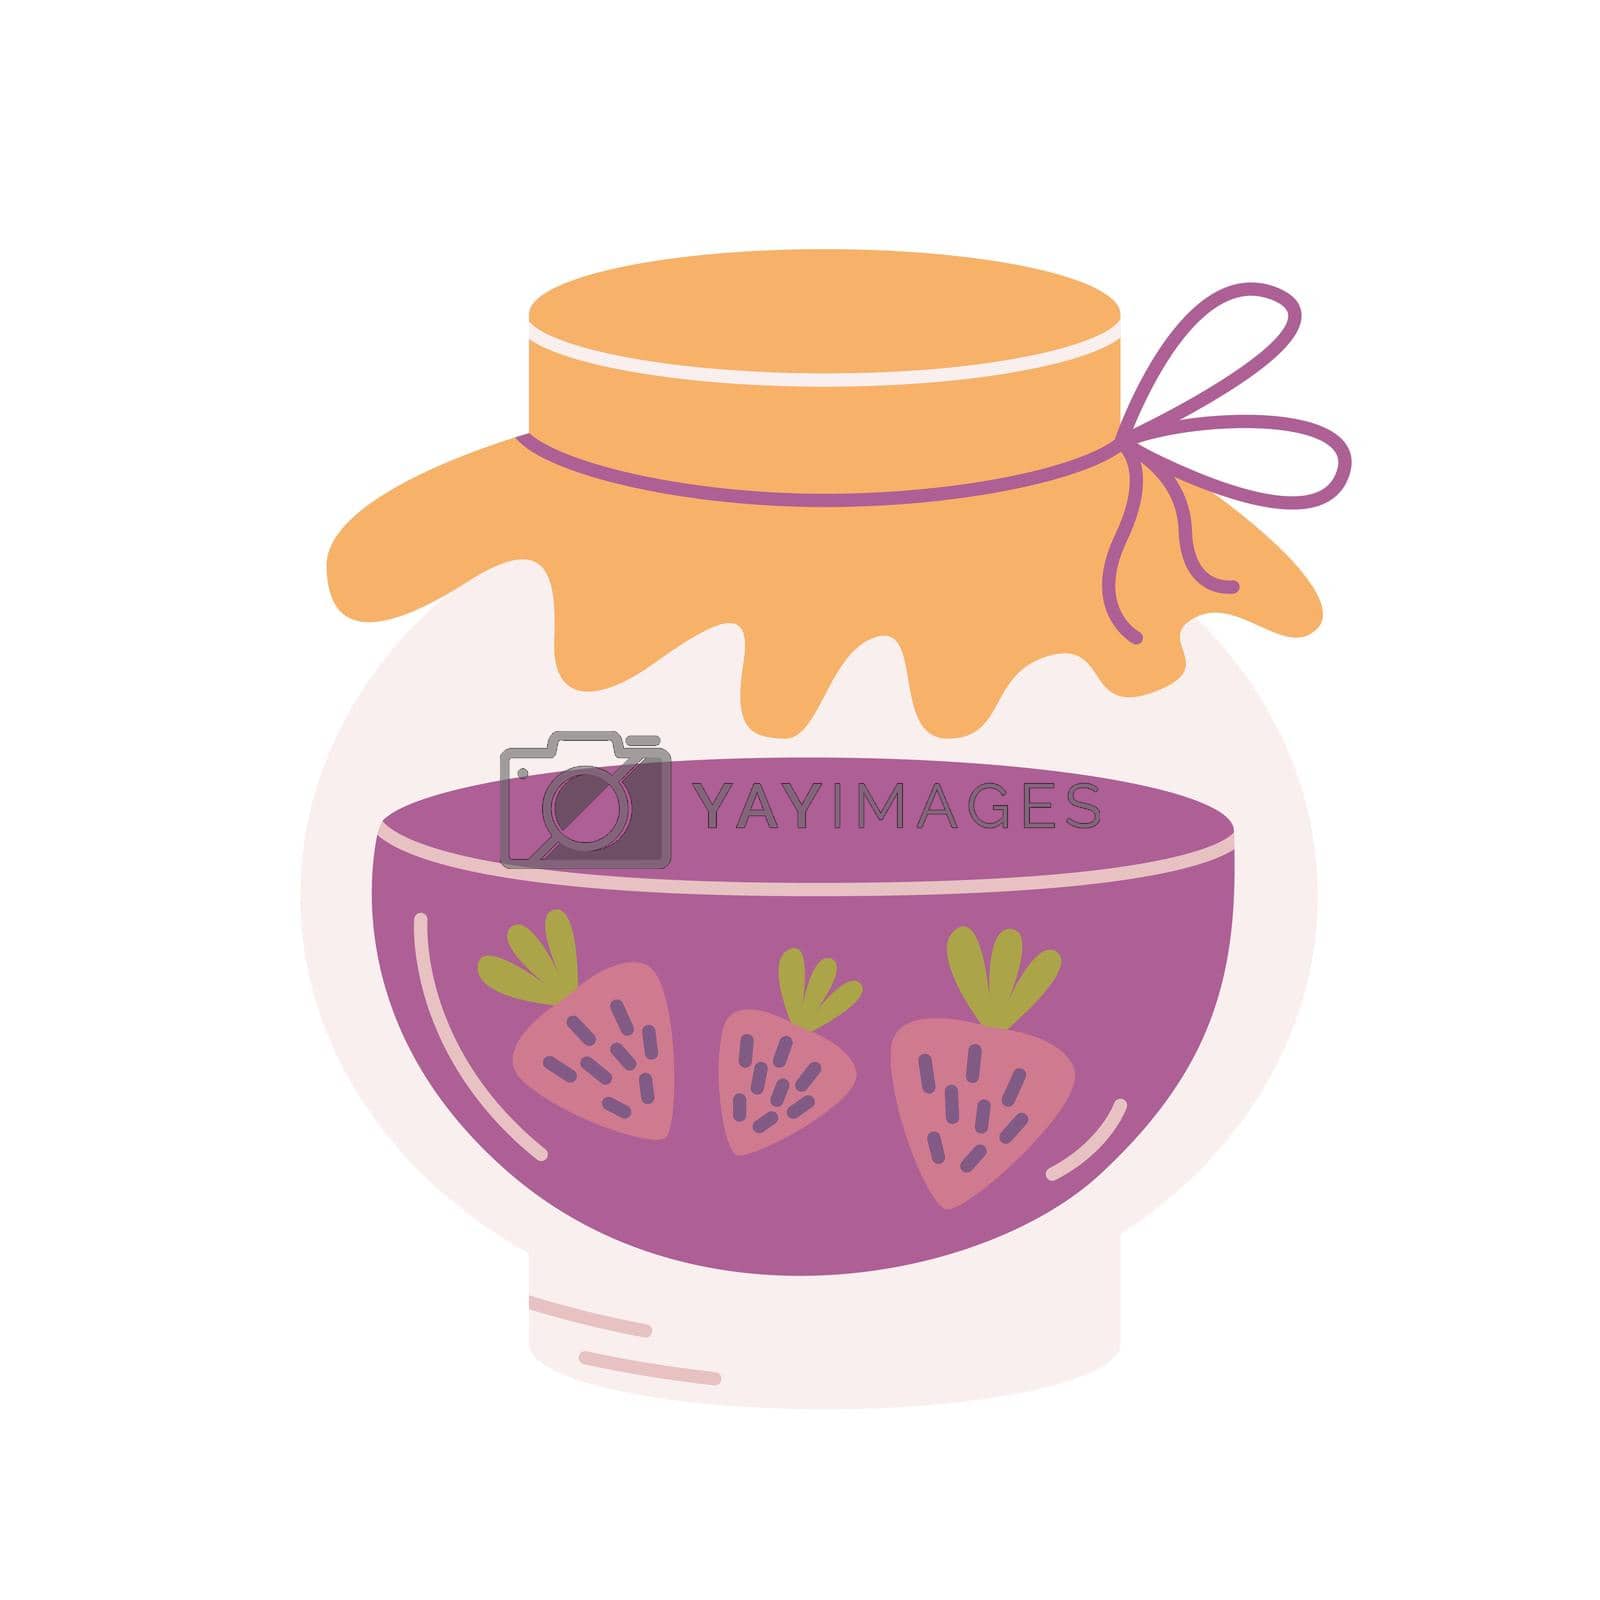 Royalty free image of Strawberry jam in round glass jar, vector flat illustration by vetriciya_art